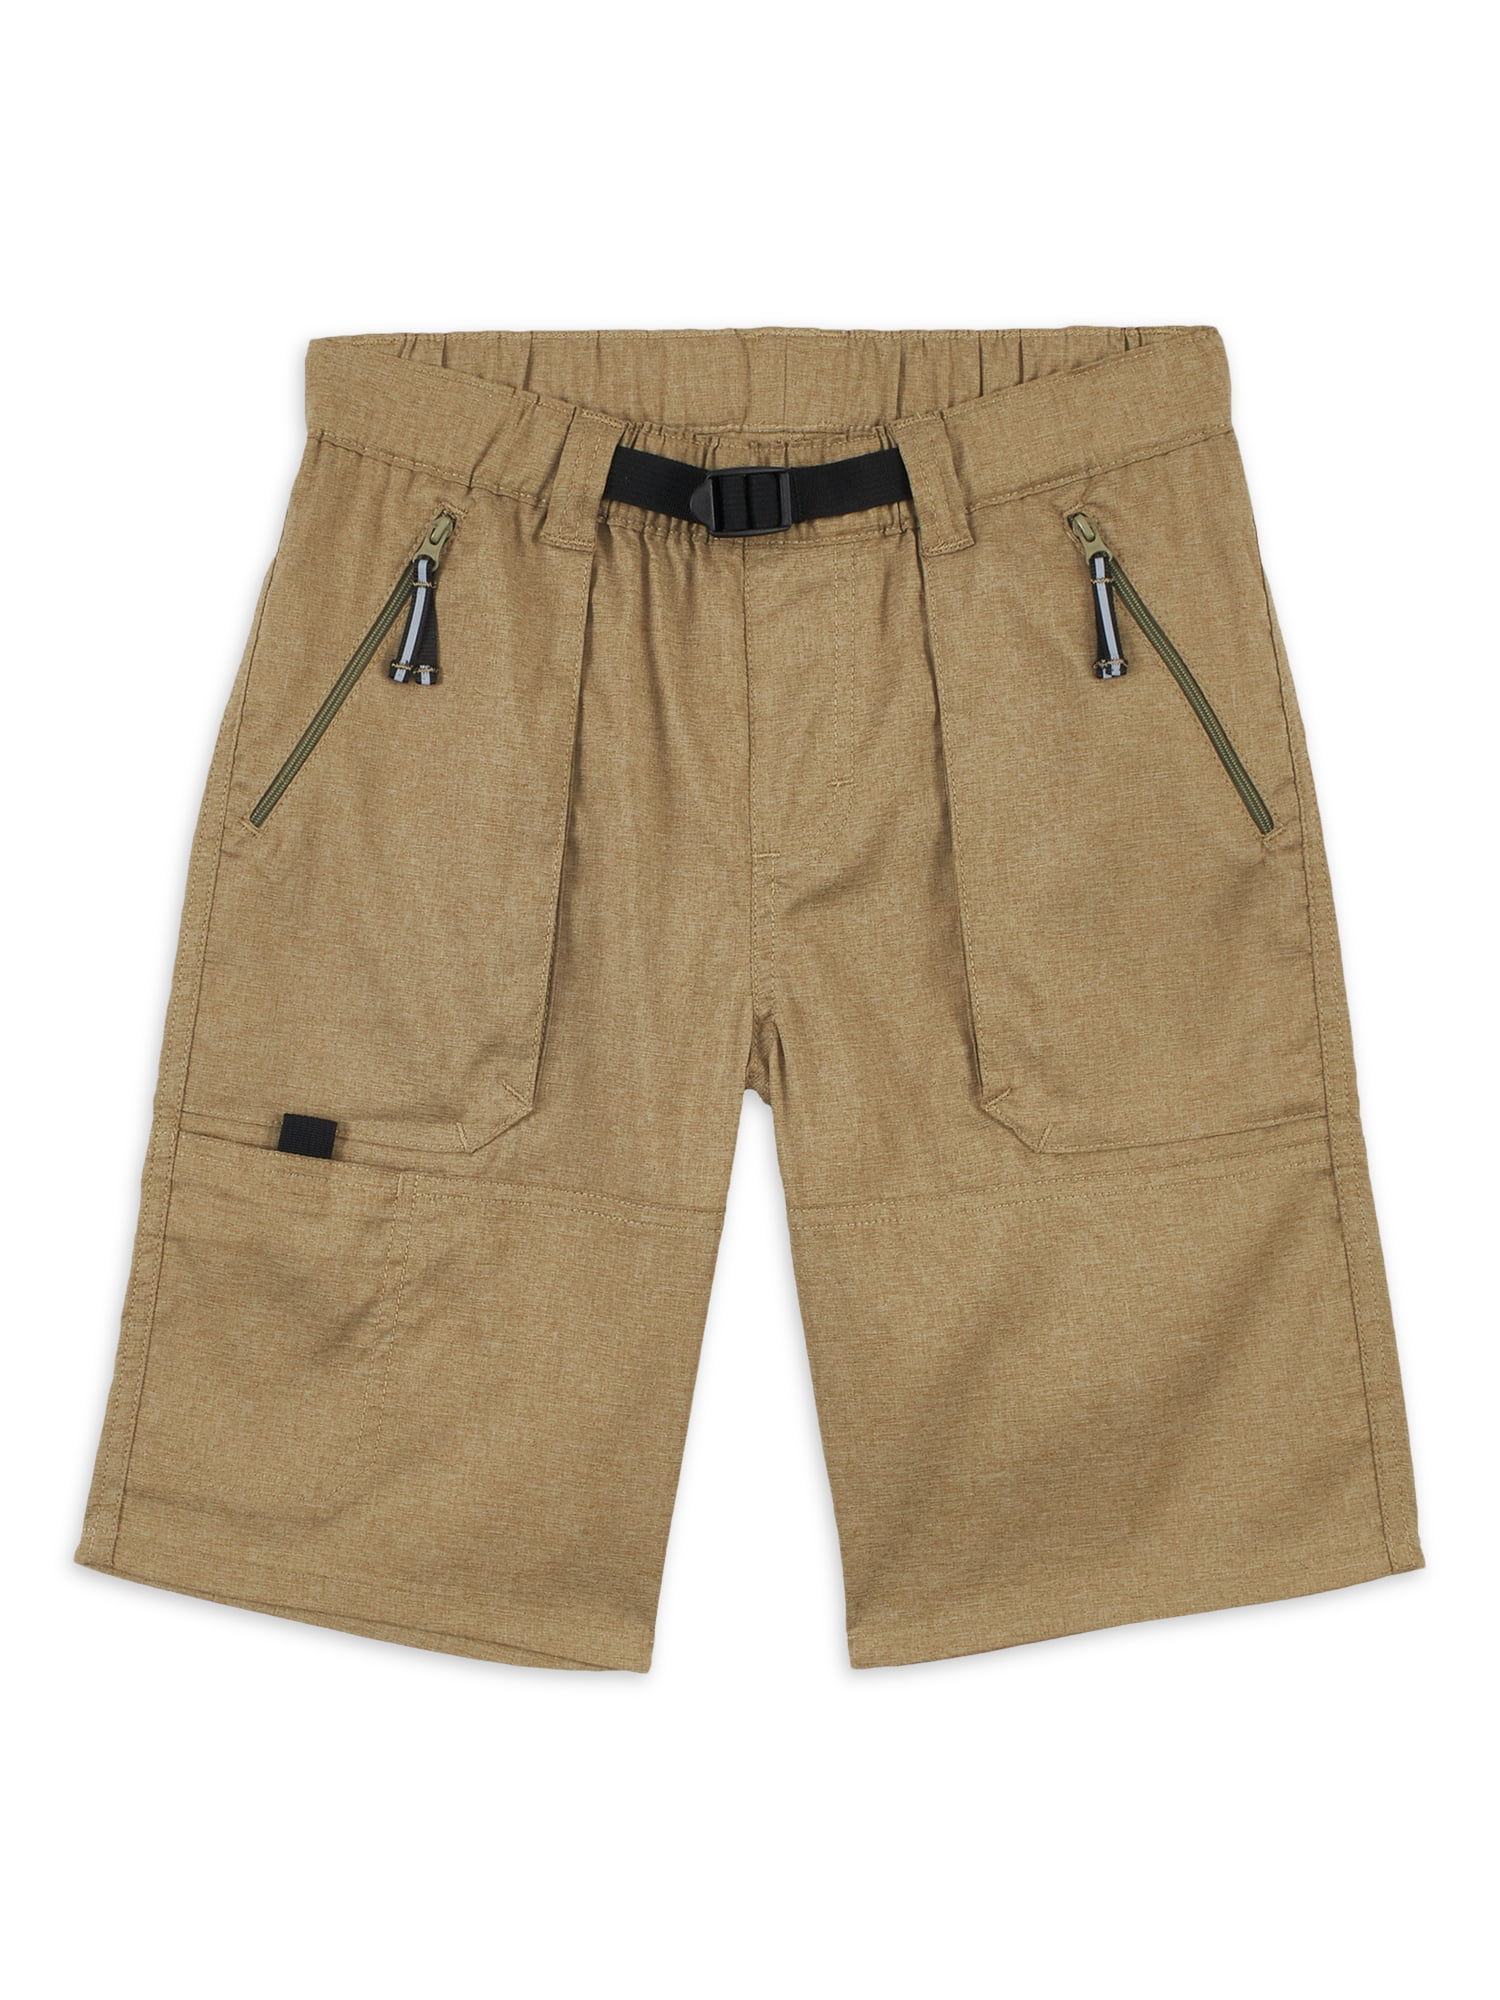 Wrangler Boys Outdoor Pull-On Short, Sizes 4-18 & Husky - Walmart.com